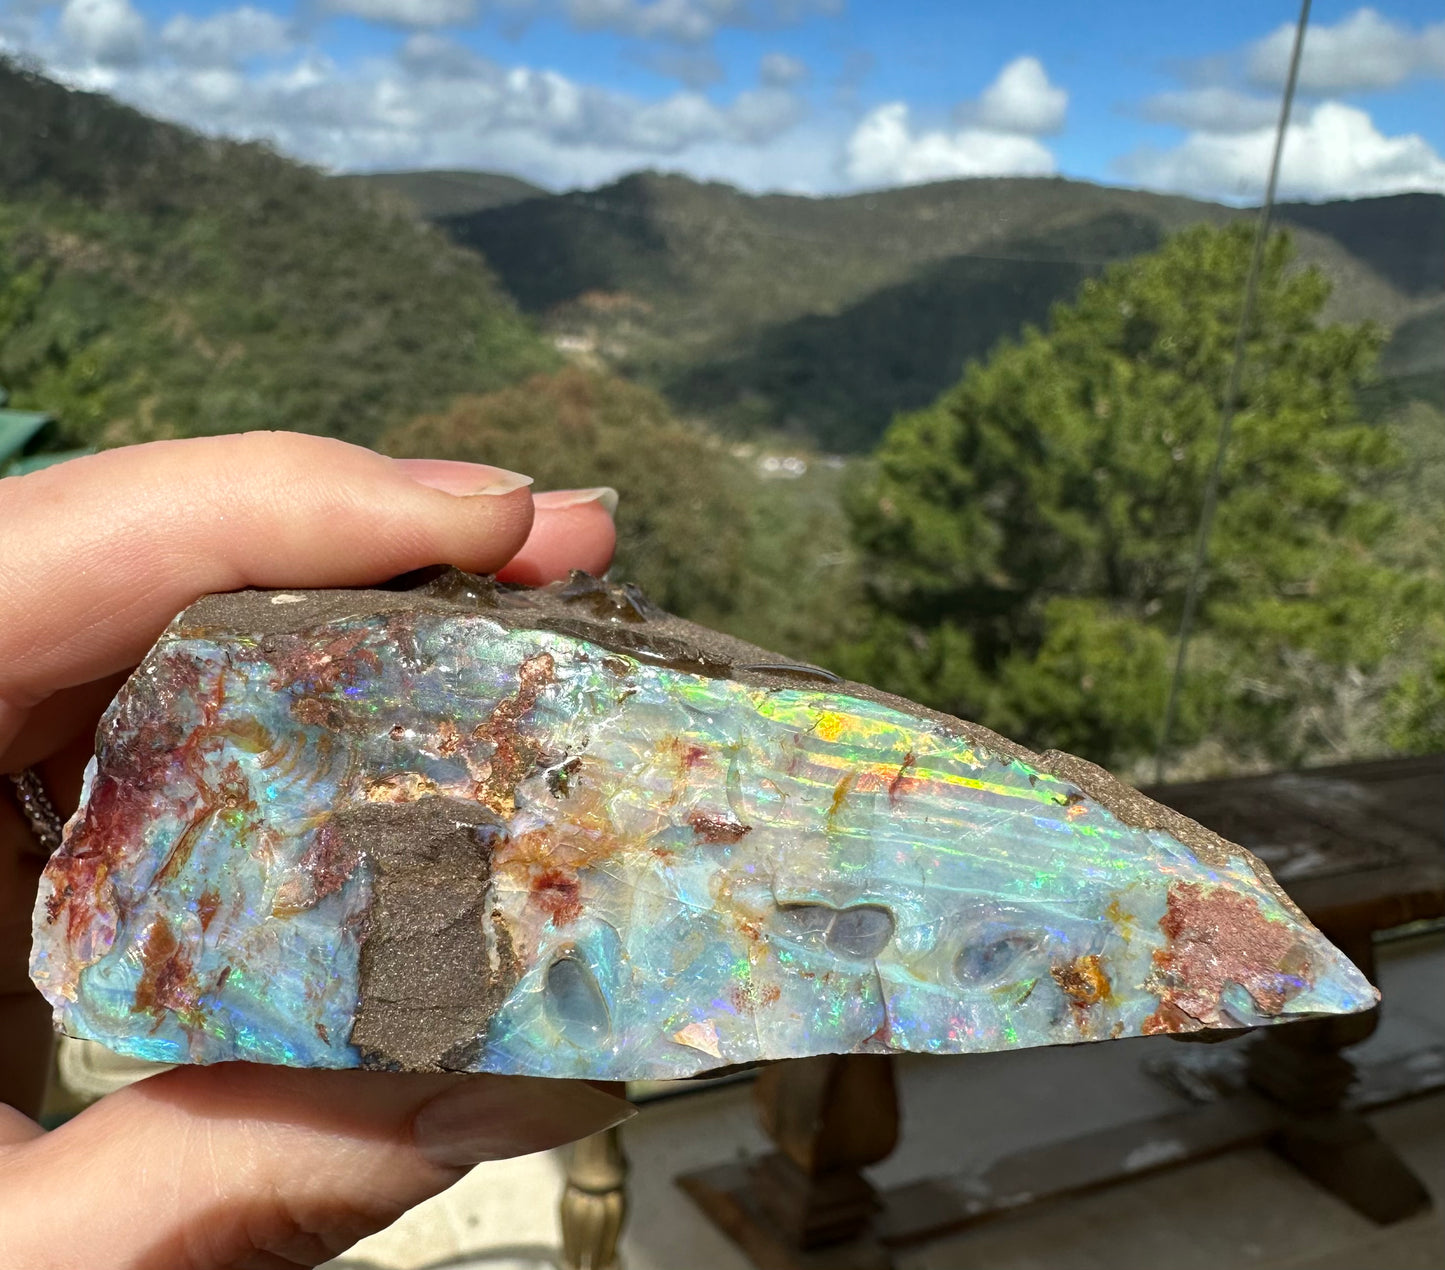 Natural Australian Boulder Opal Specimen